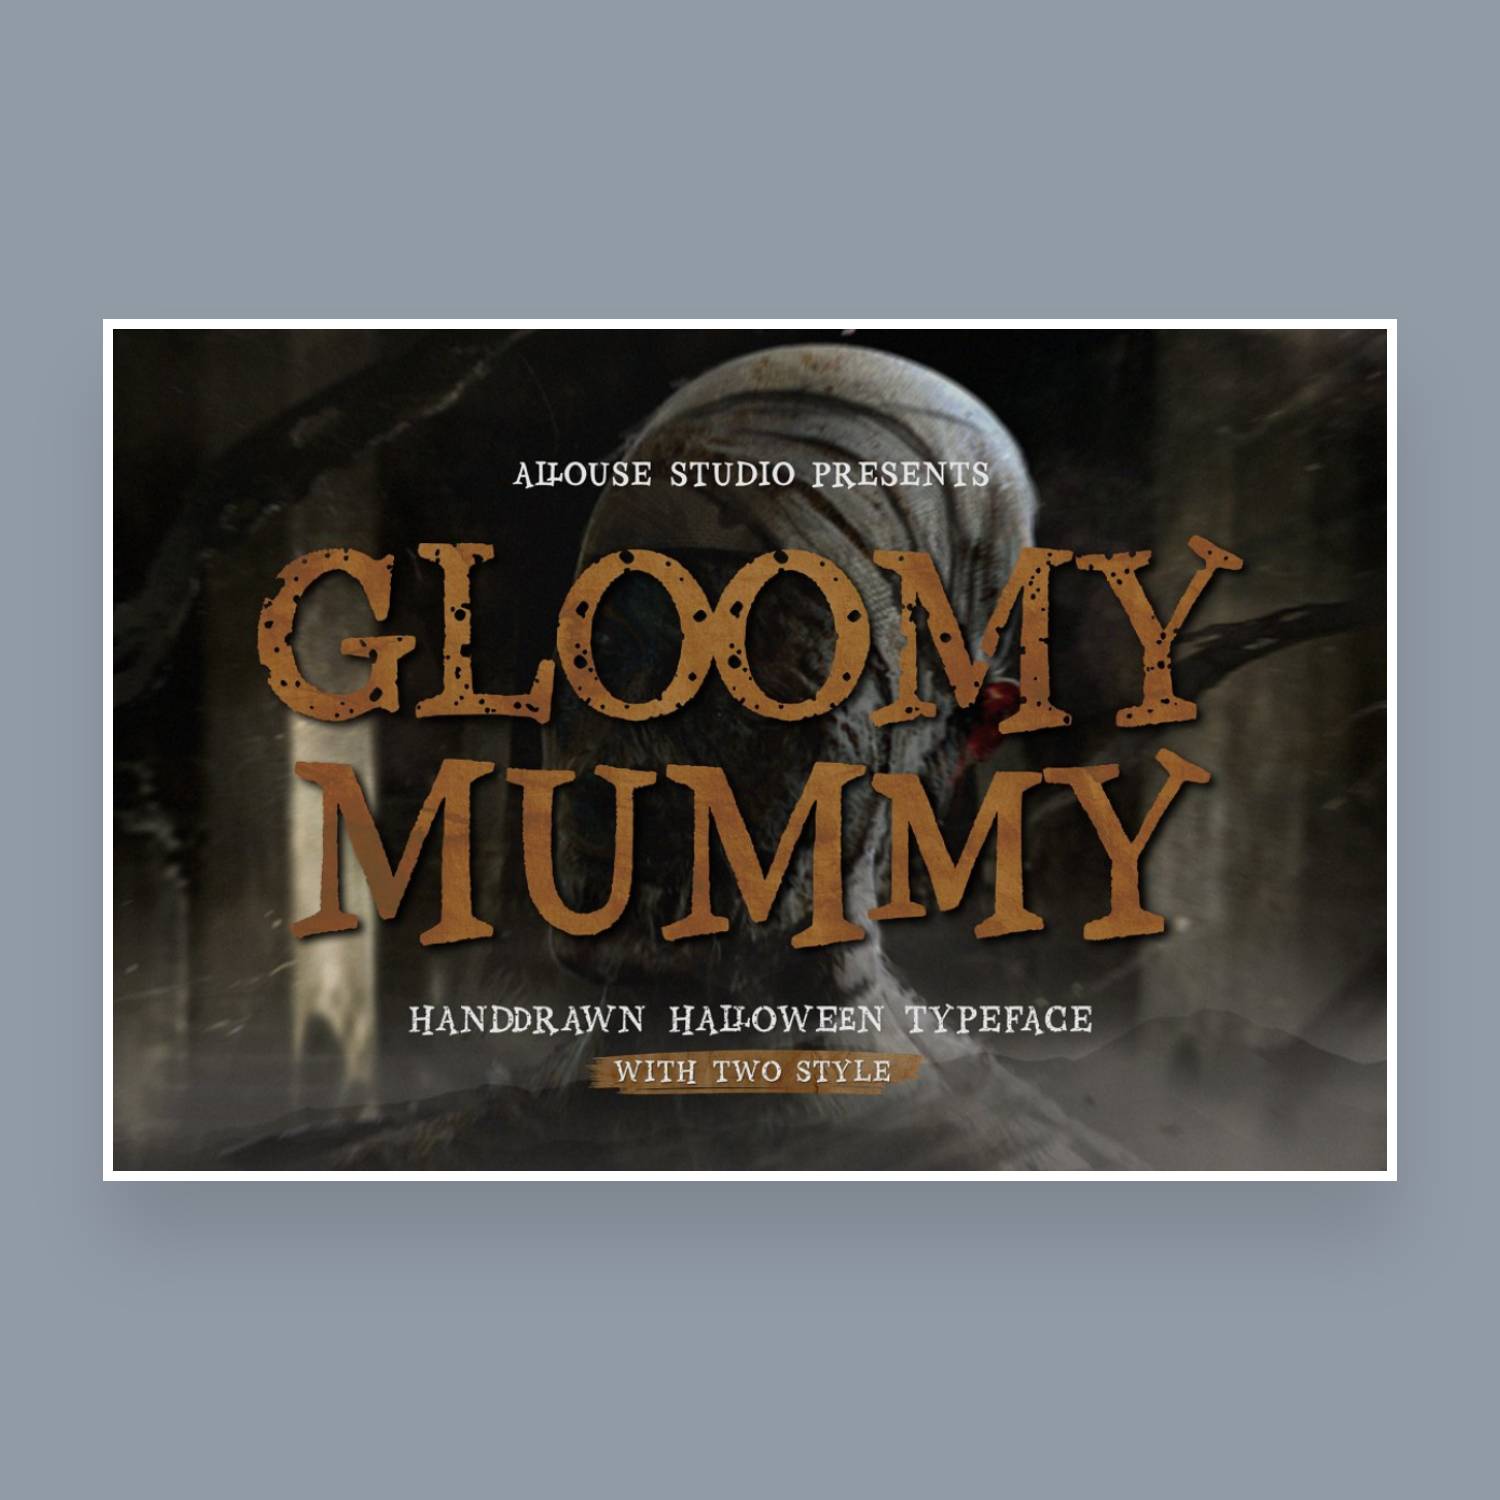 Gloomy mummy font main cover.